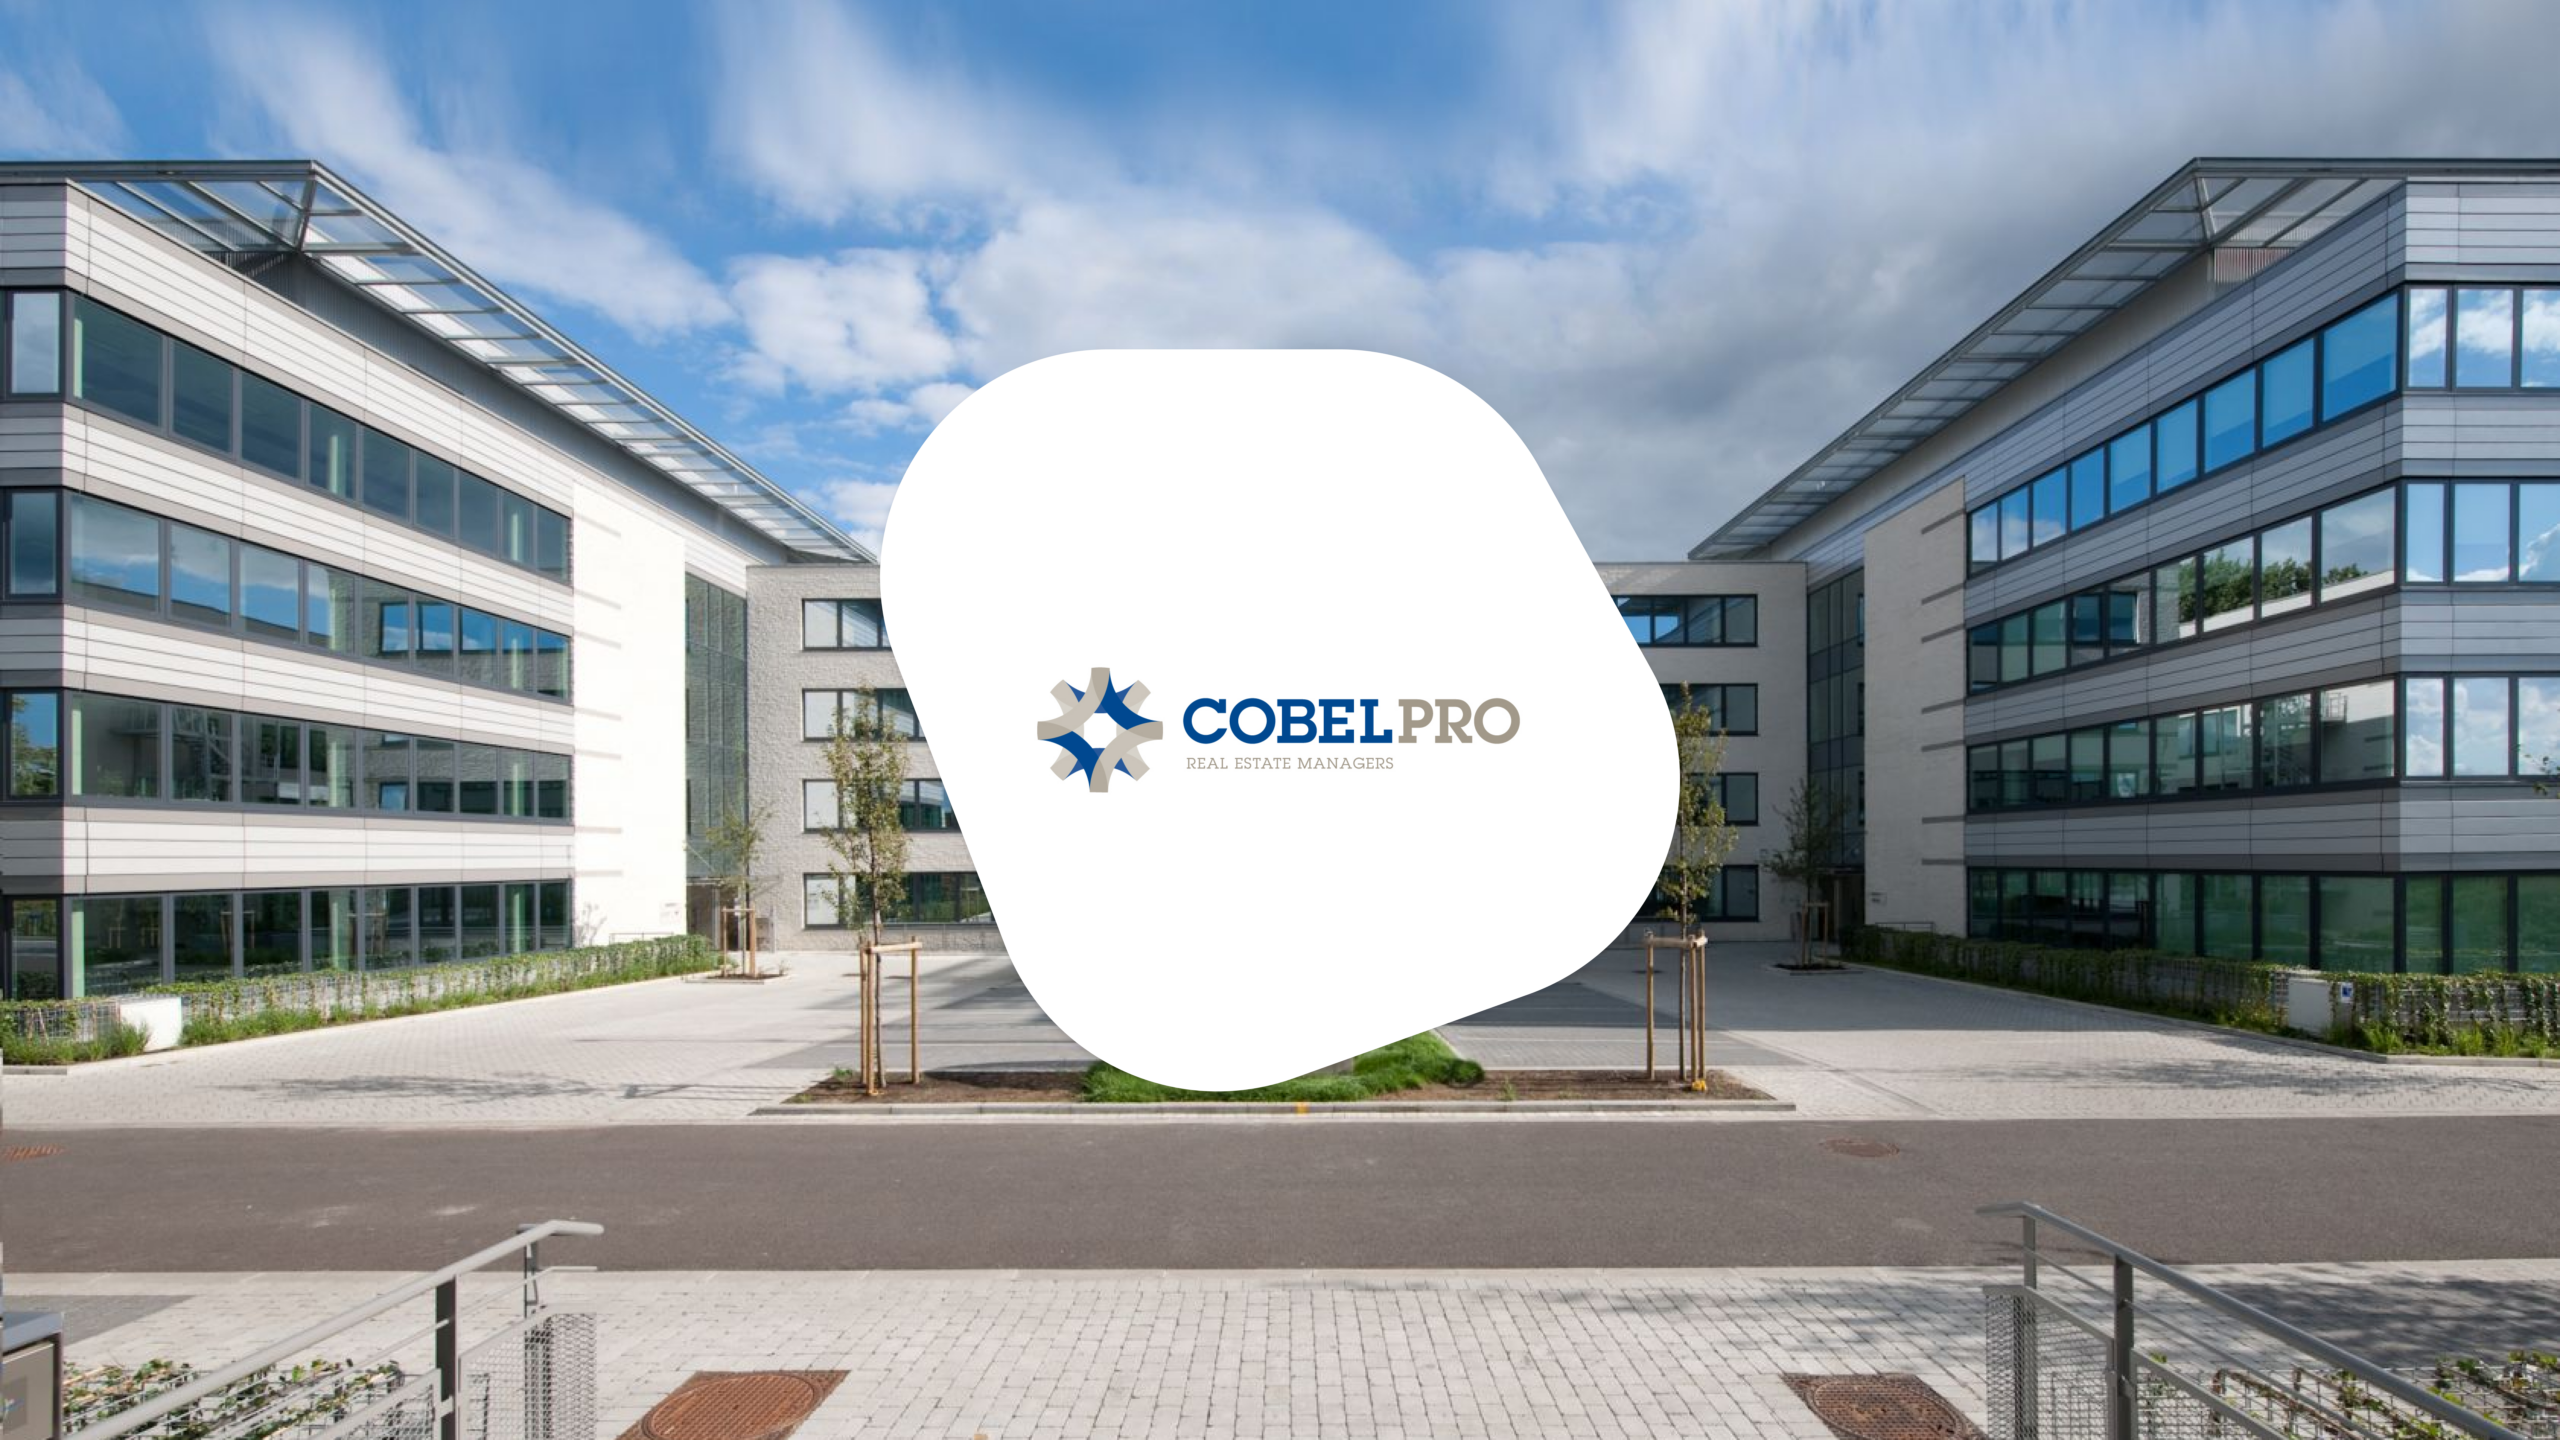 Cobelpro starts partnership with Proprli